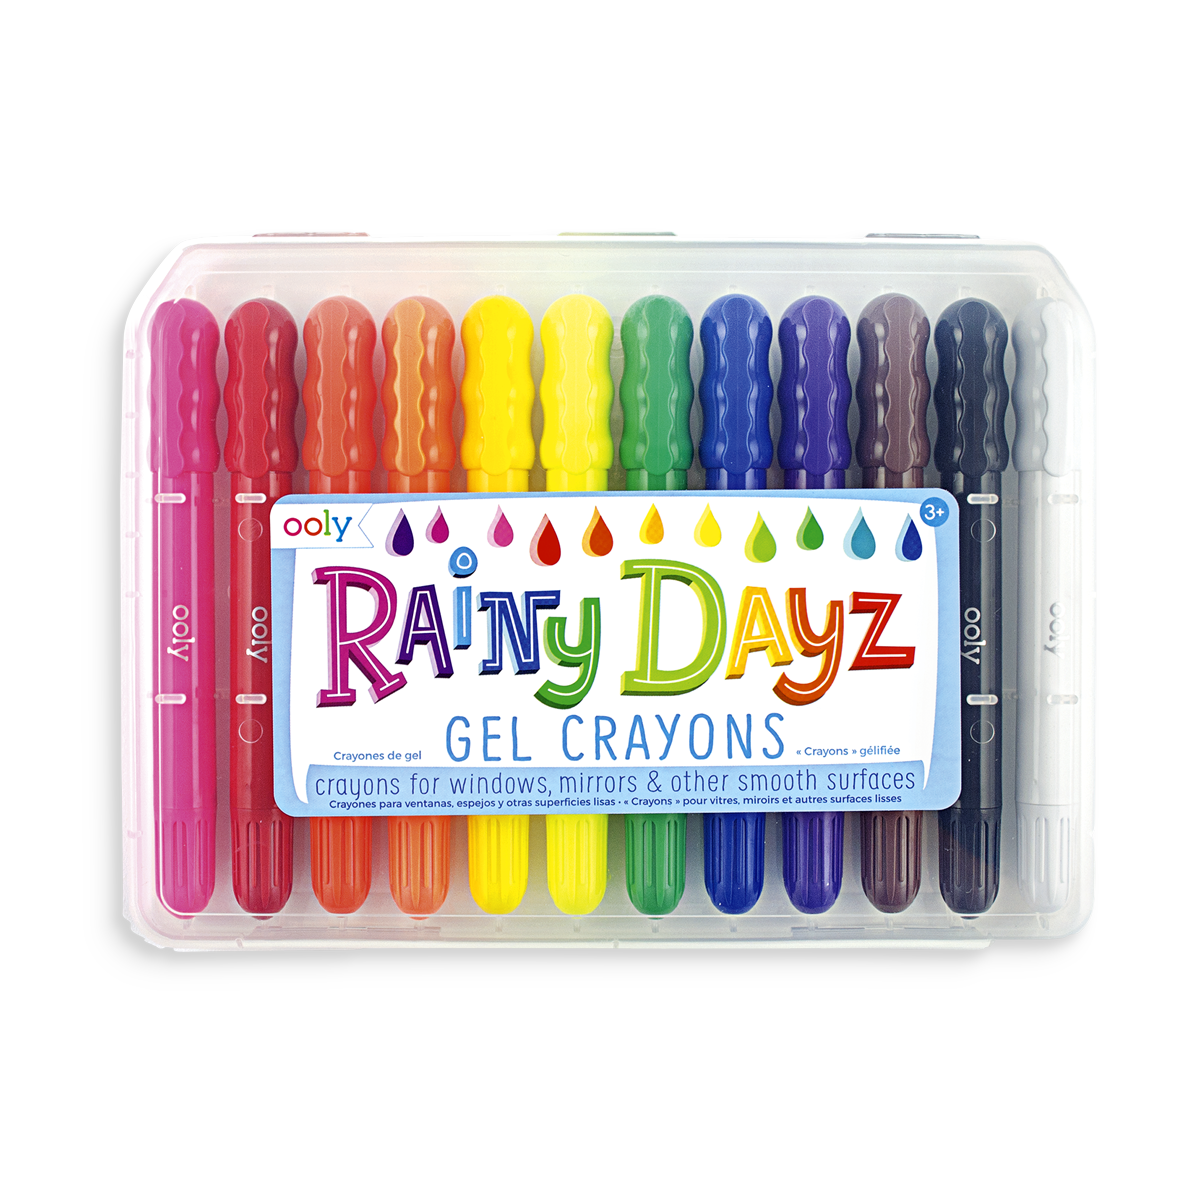 OOLY Rainy Dayz Gel Crayons Crayons